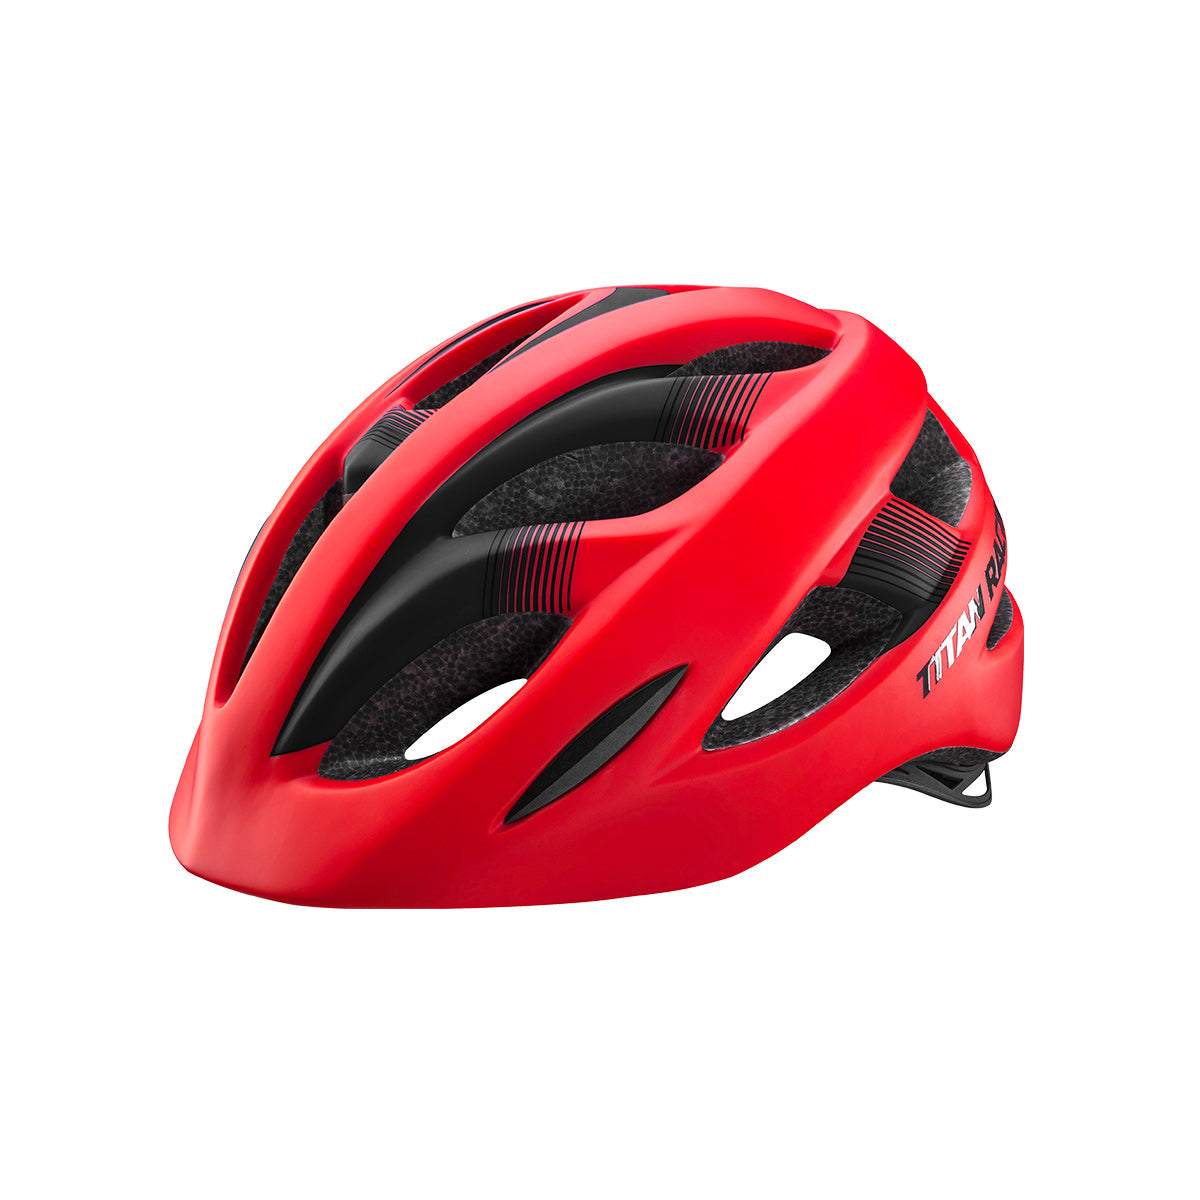 Titan Racing Kiddies Helmet